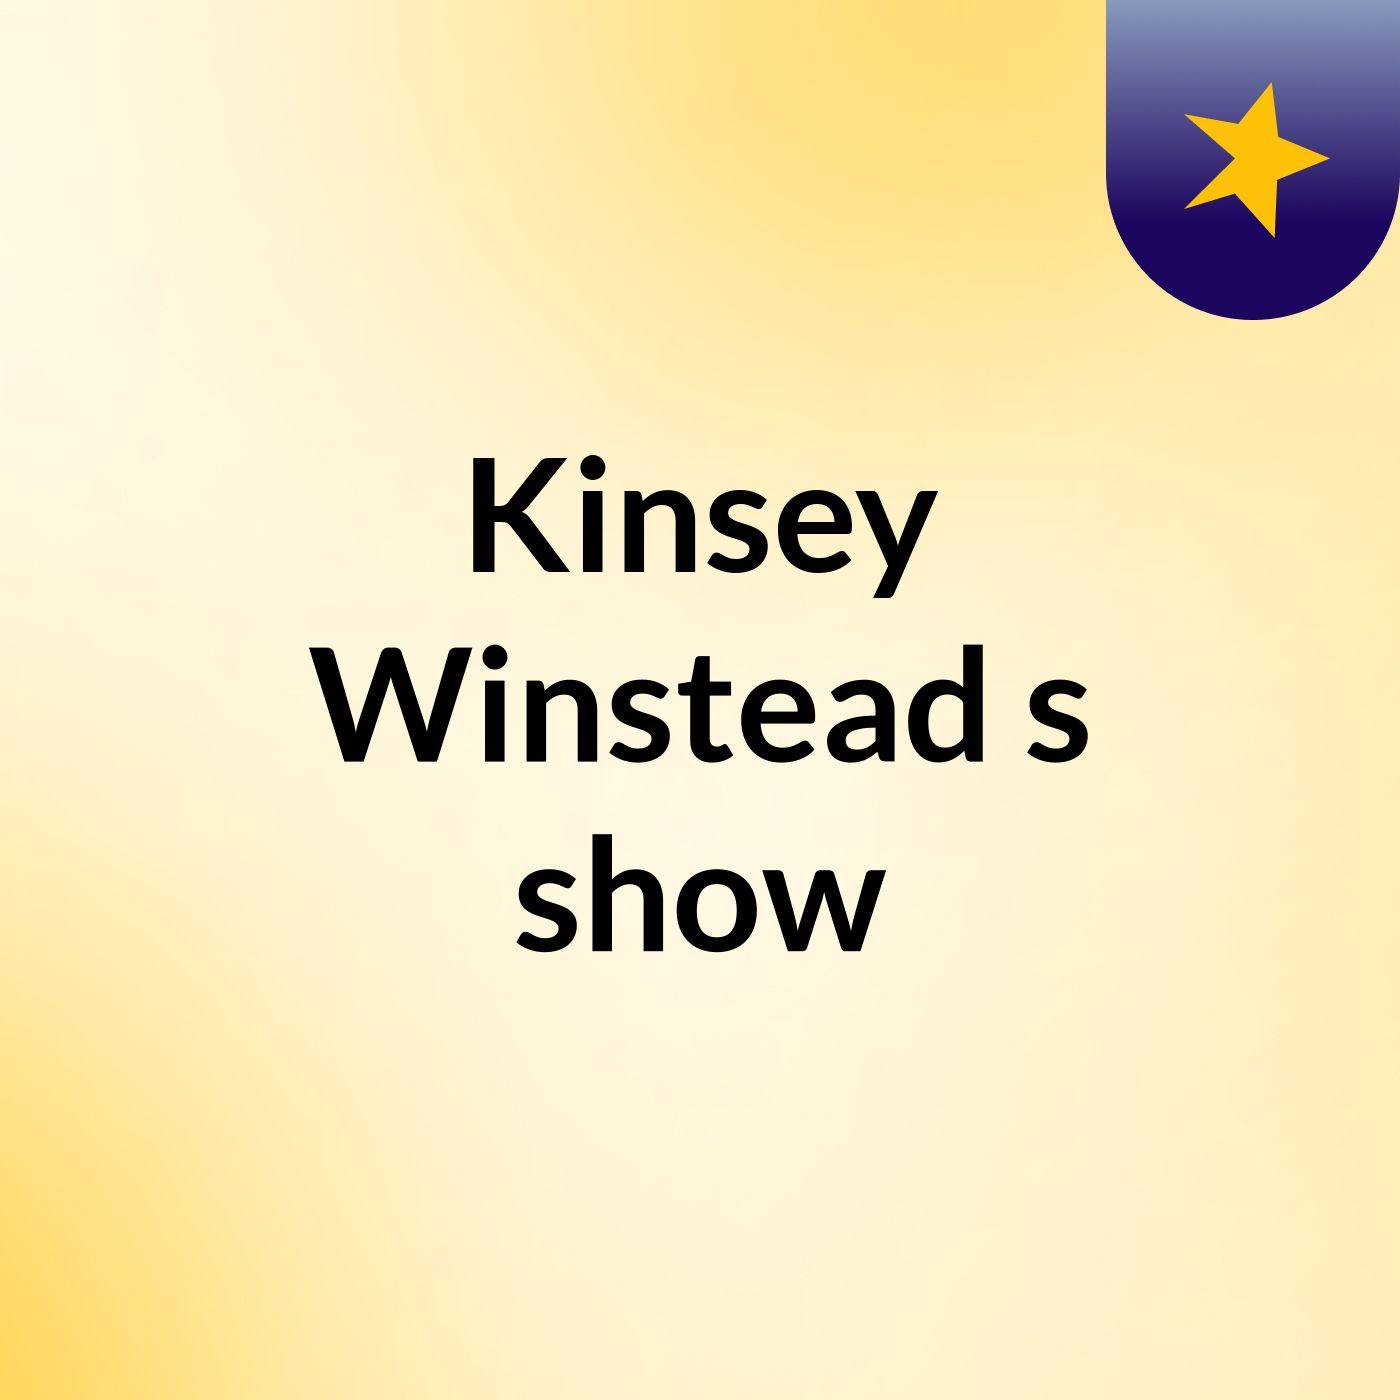 Kinsey Winstead's show